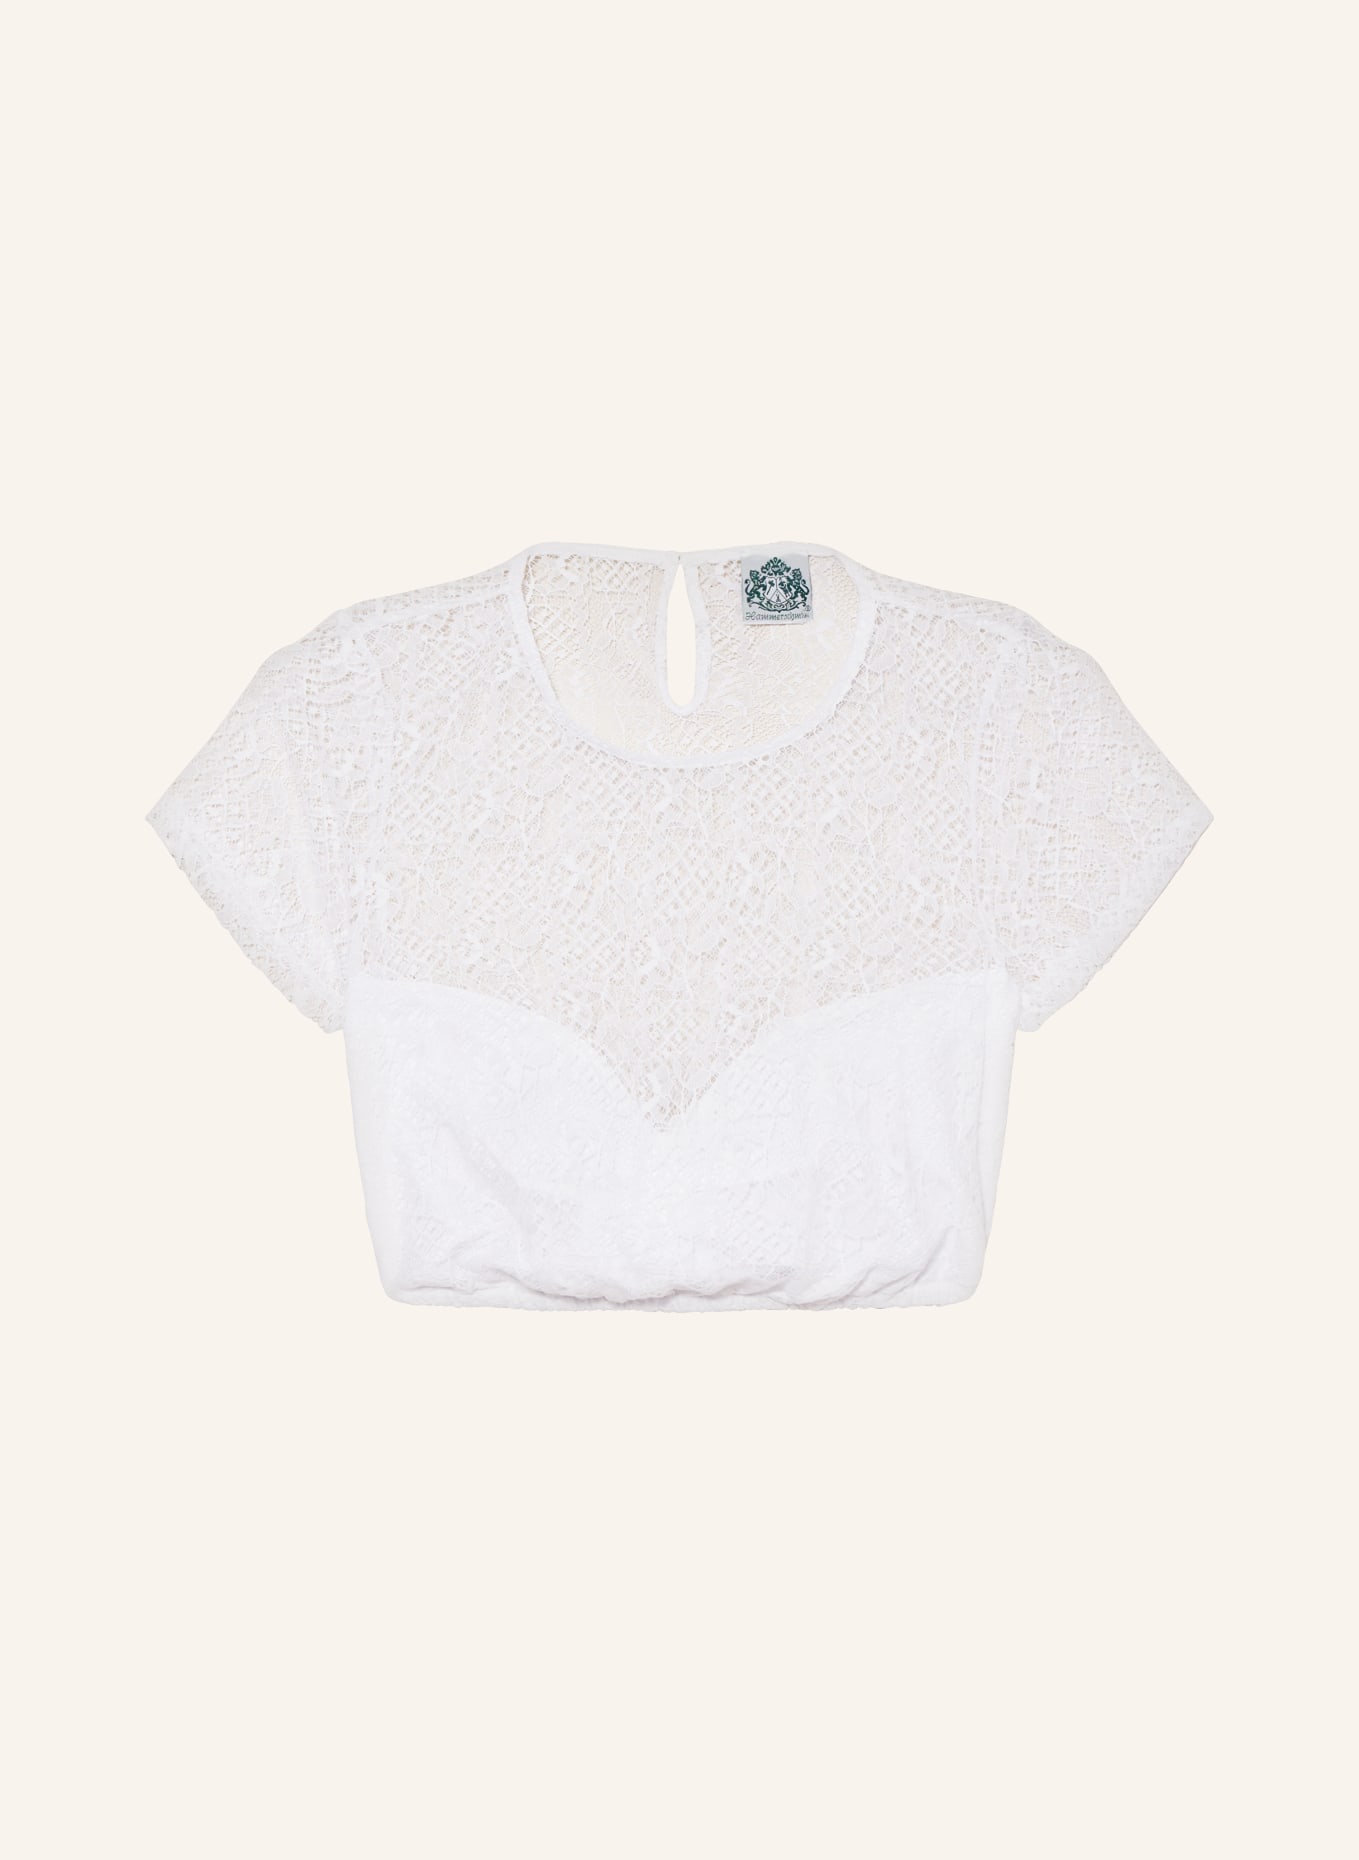 Hammerschmid Dirndl blouse DORLE in lace, Color: WHITE (Image 1)